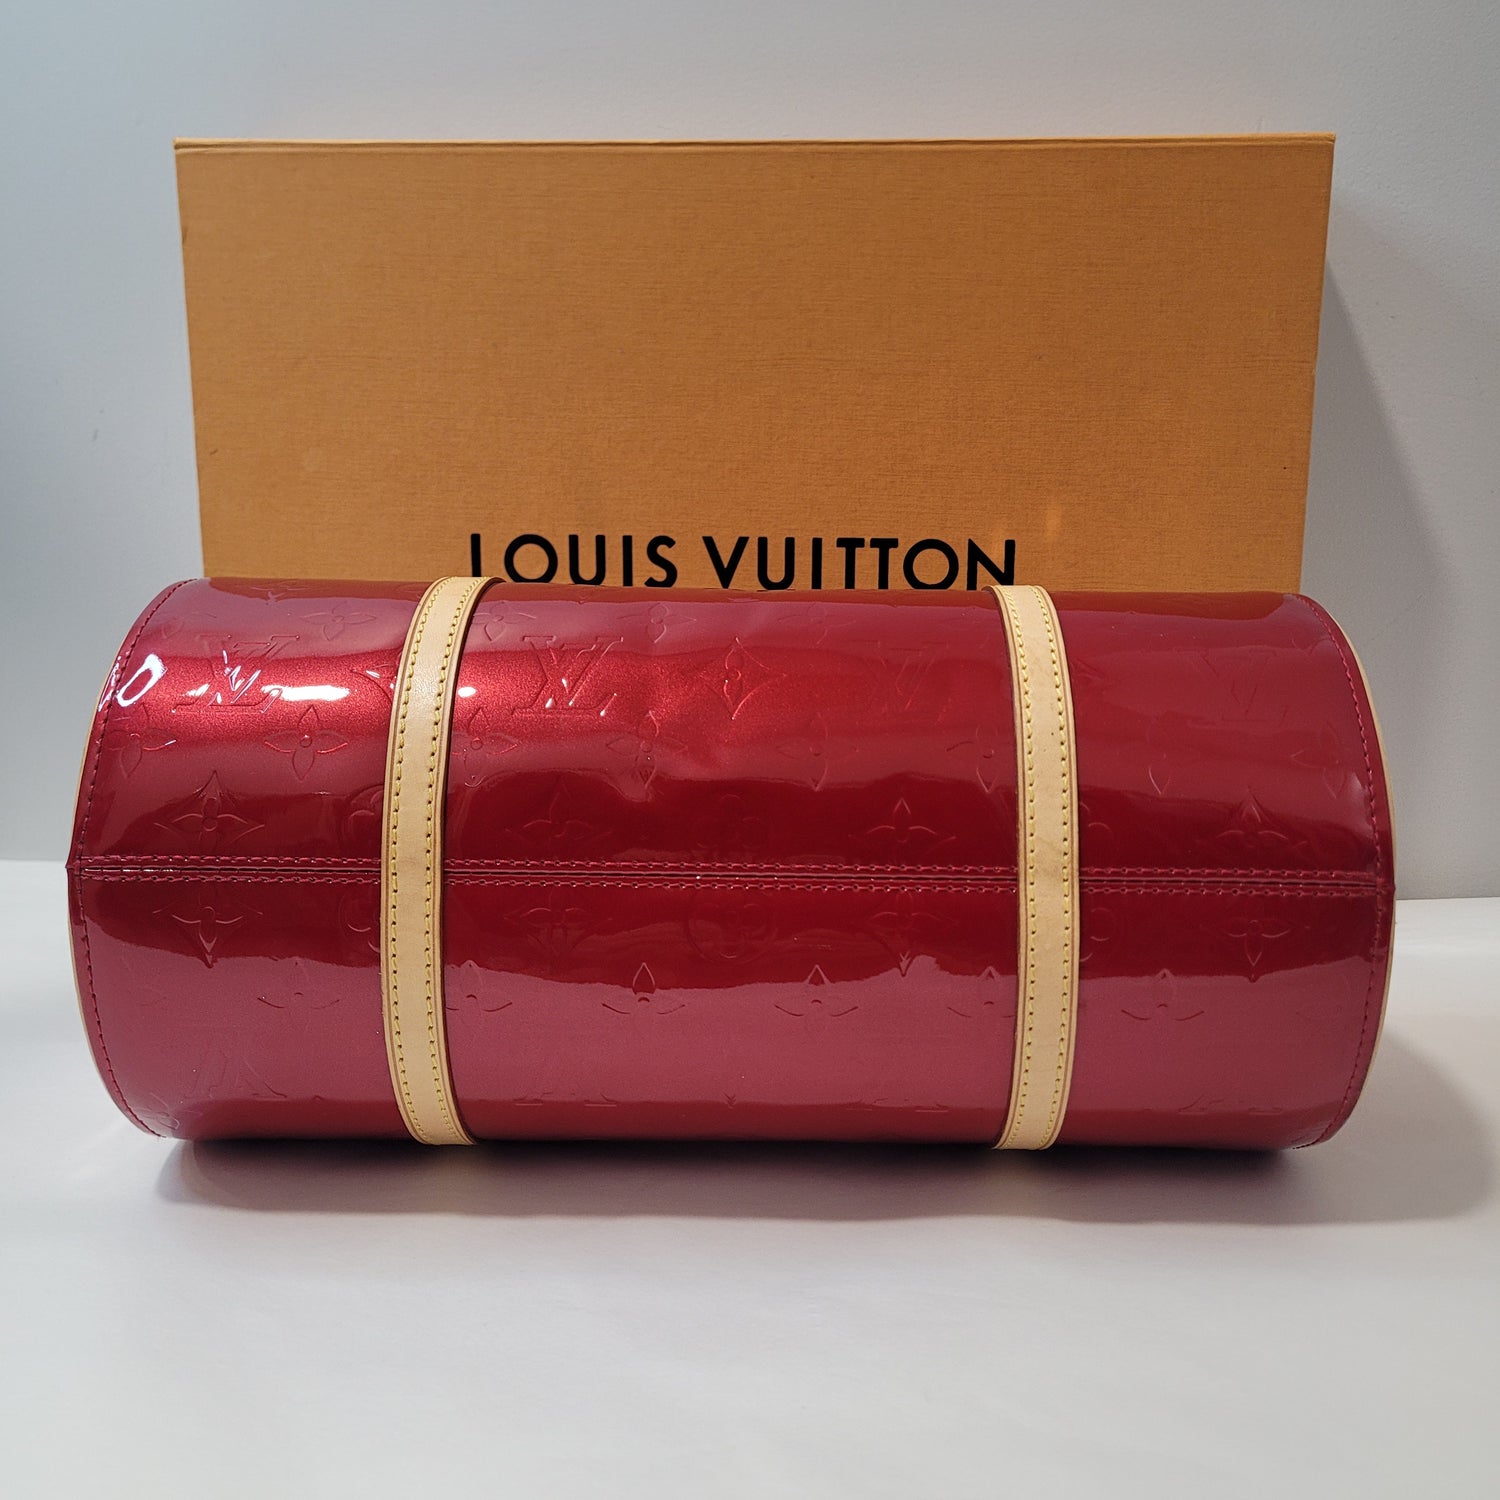 Louis Vuitton - Bedford bag